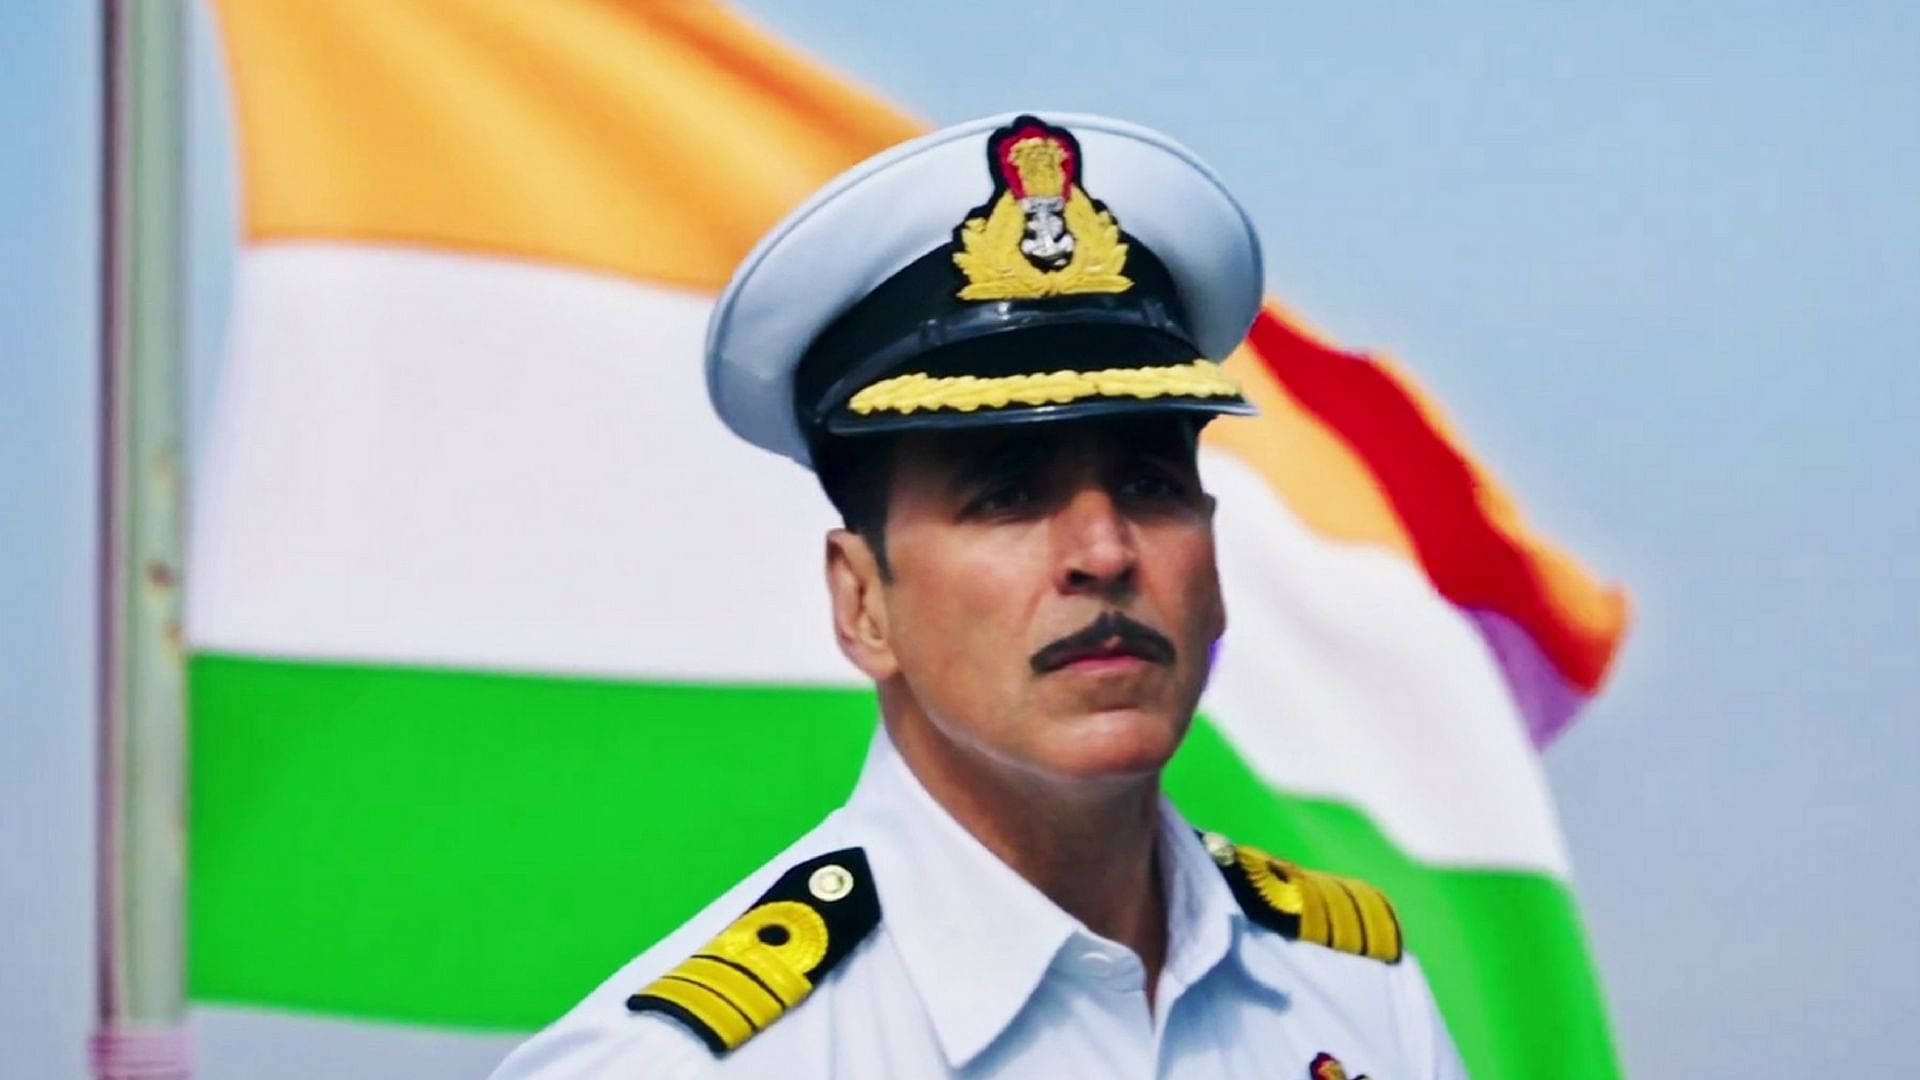 Akshay Kumar In Marine Uniform